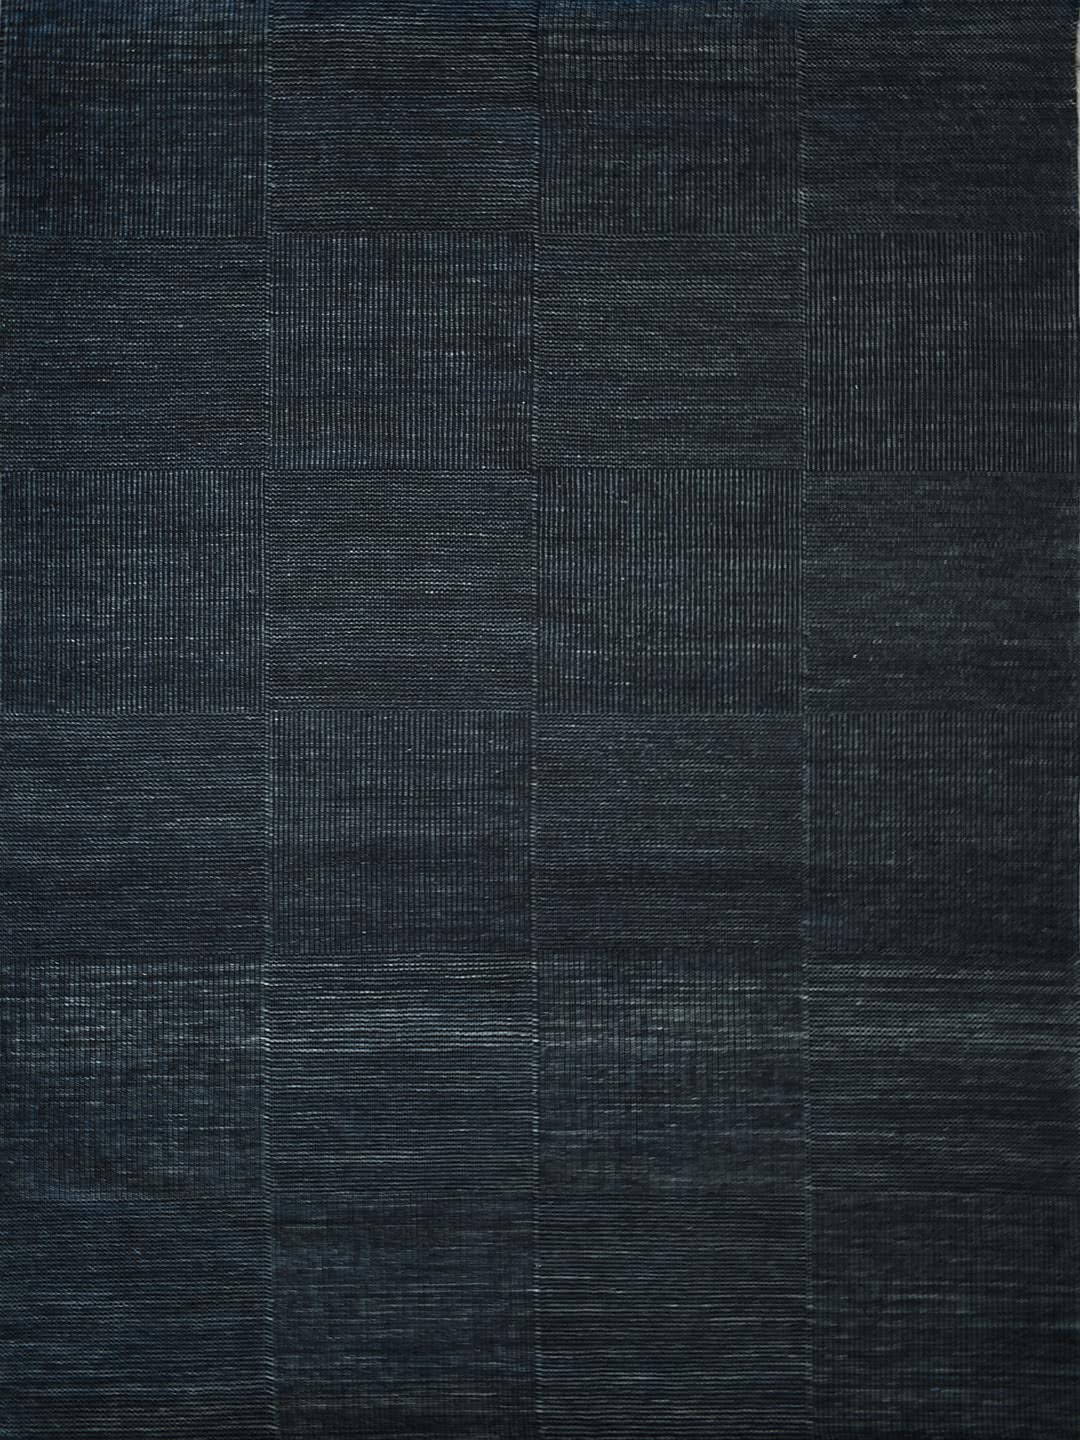 Braid Box Abyss flatweave rug in black and grey, handmade from 100% wool